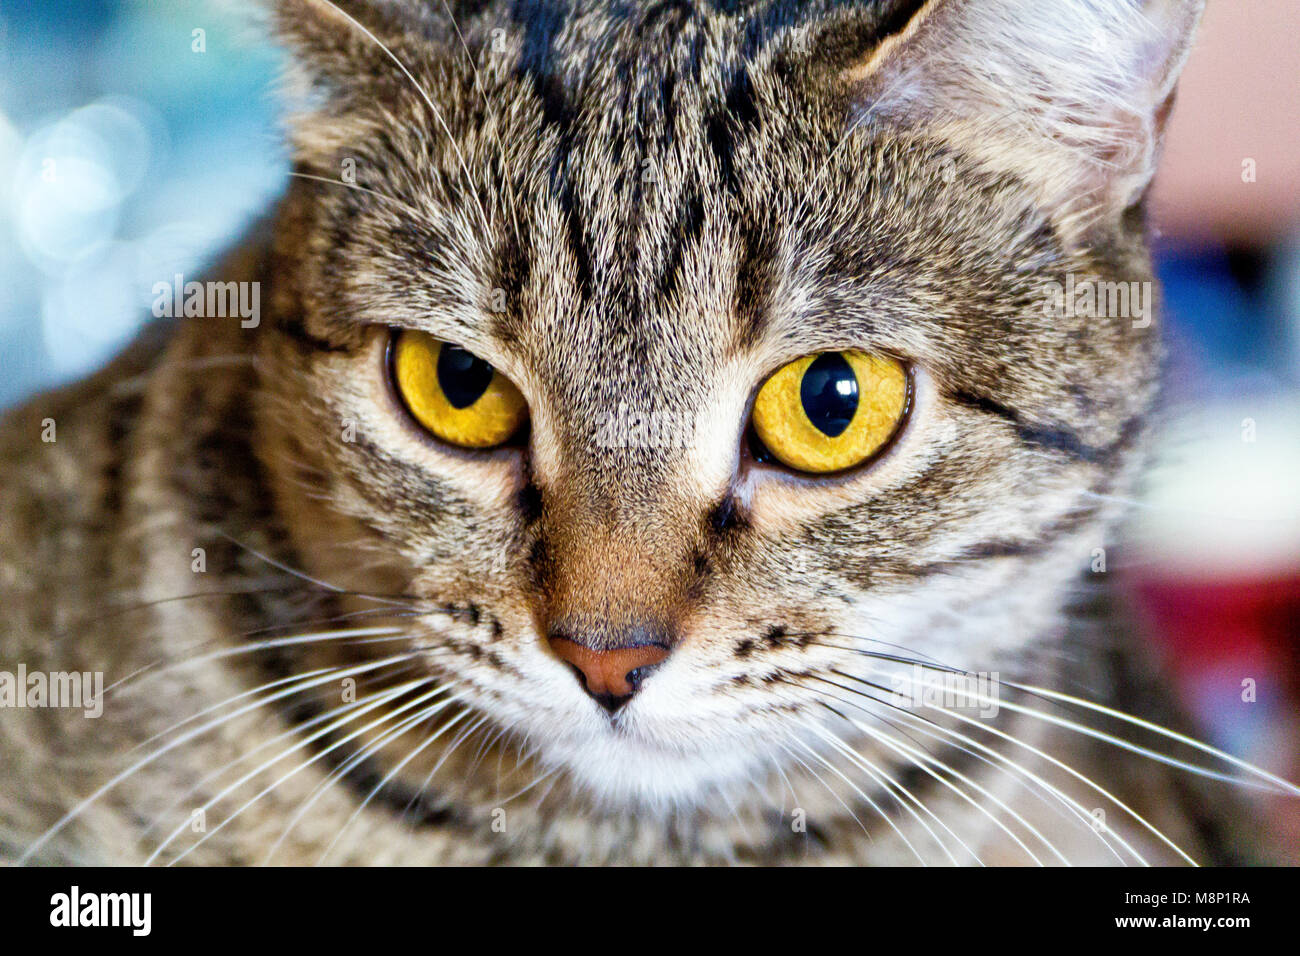 https://c8.alamy.com/comp/M8P1RA/serious-domestic-tiger-cat-with-yellow-eyes-M8P1RA.jpg